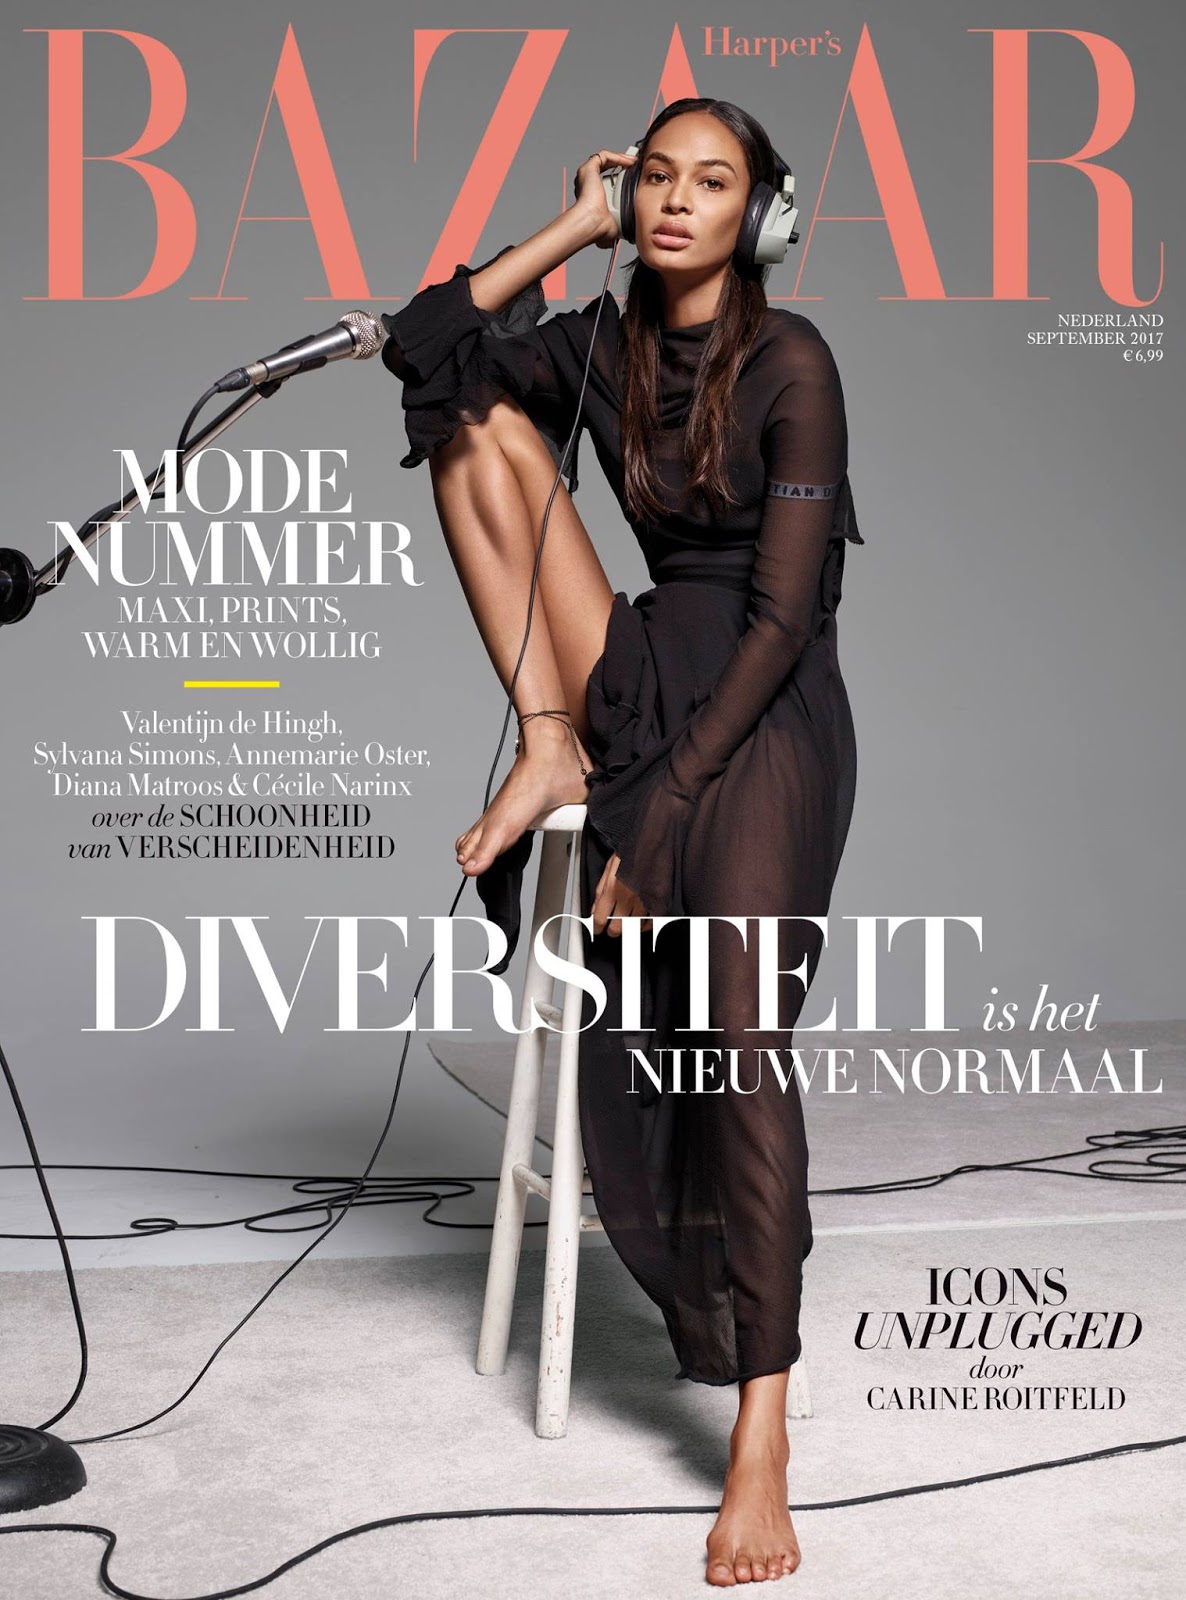 Harpers Bazaar September 2017 Netherlands.jpg